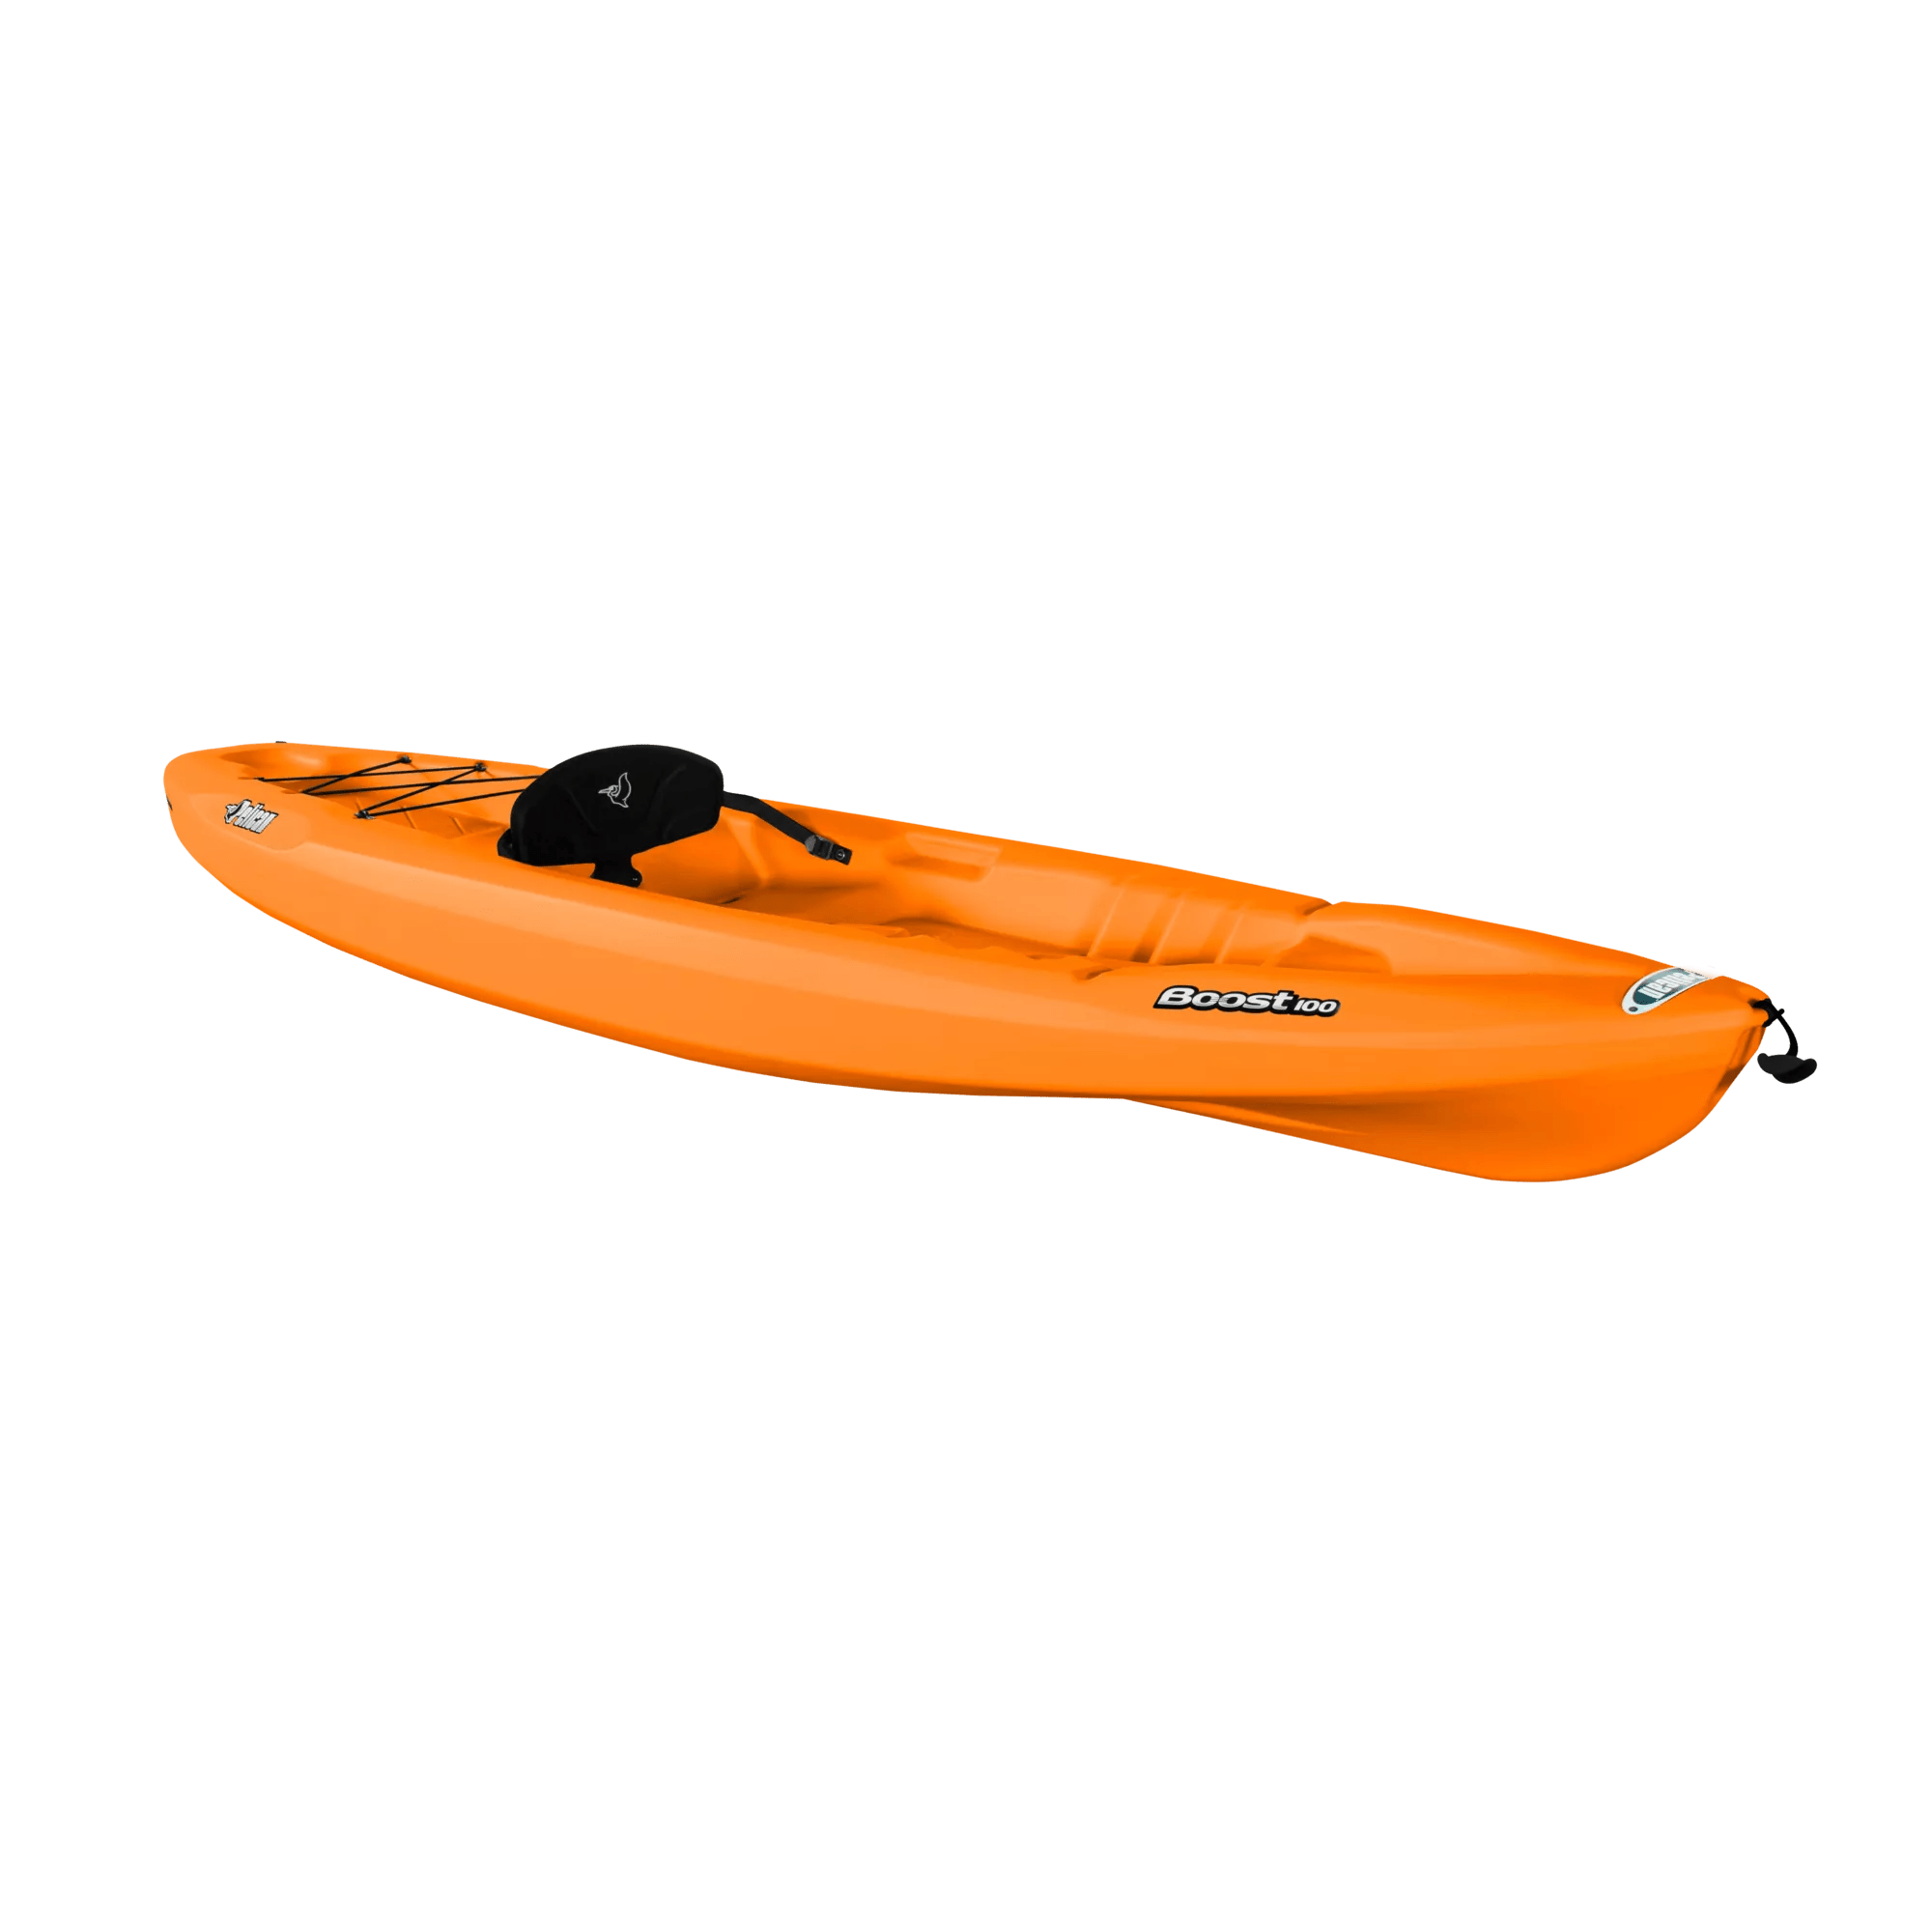 PELICAN - Boost 100 Recreational Kayak - Discontinued color/model - Orange - KOS10P101 - ISO 